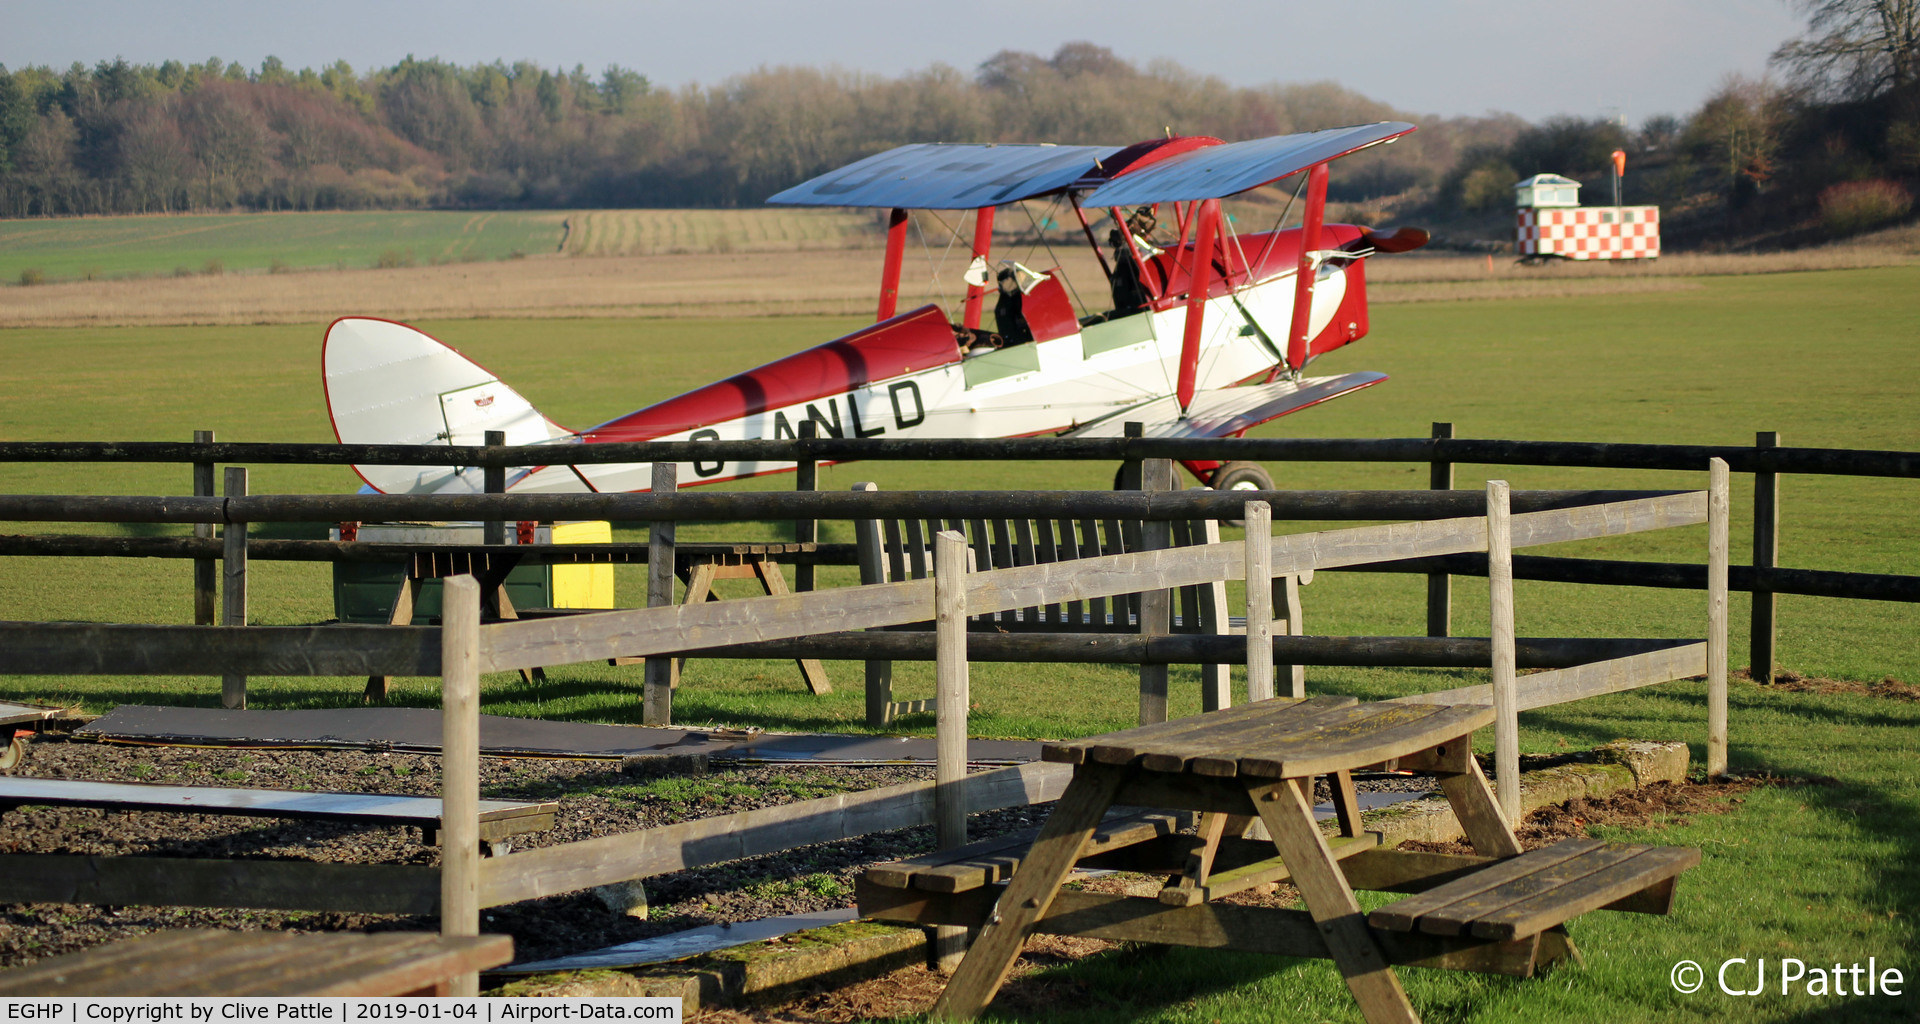 Popham Airfield Airport, Popham, England United Kingdom (EGHP) - Aircraft viewing area @ Popham